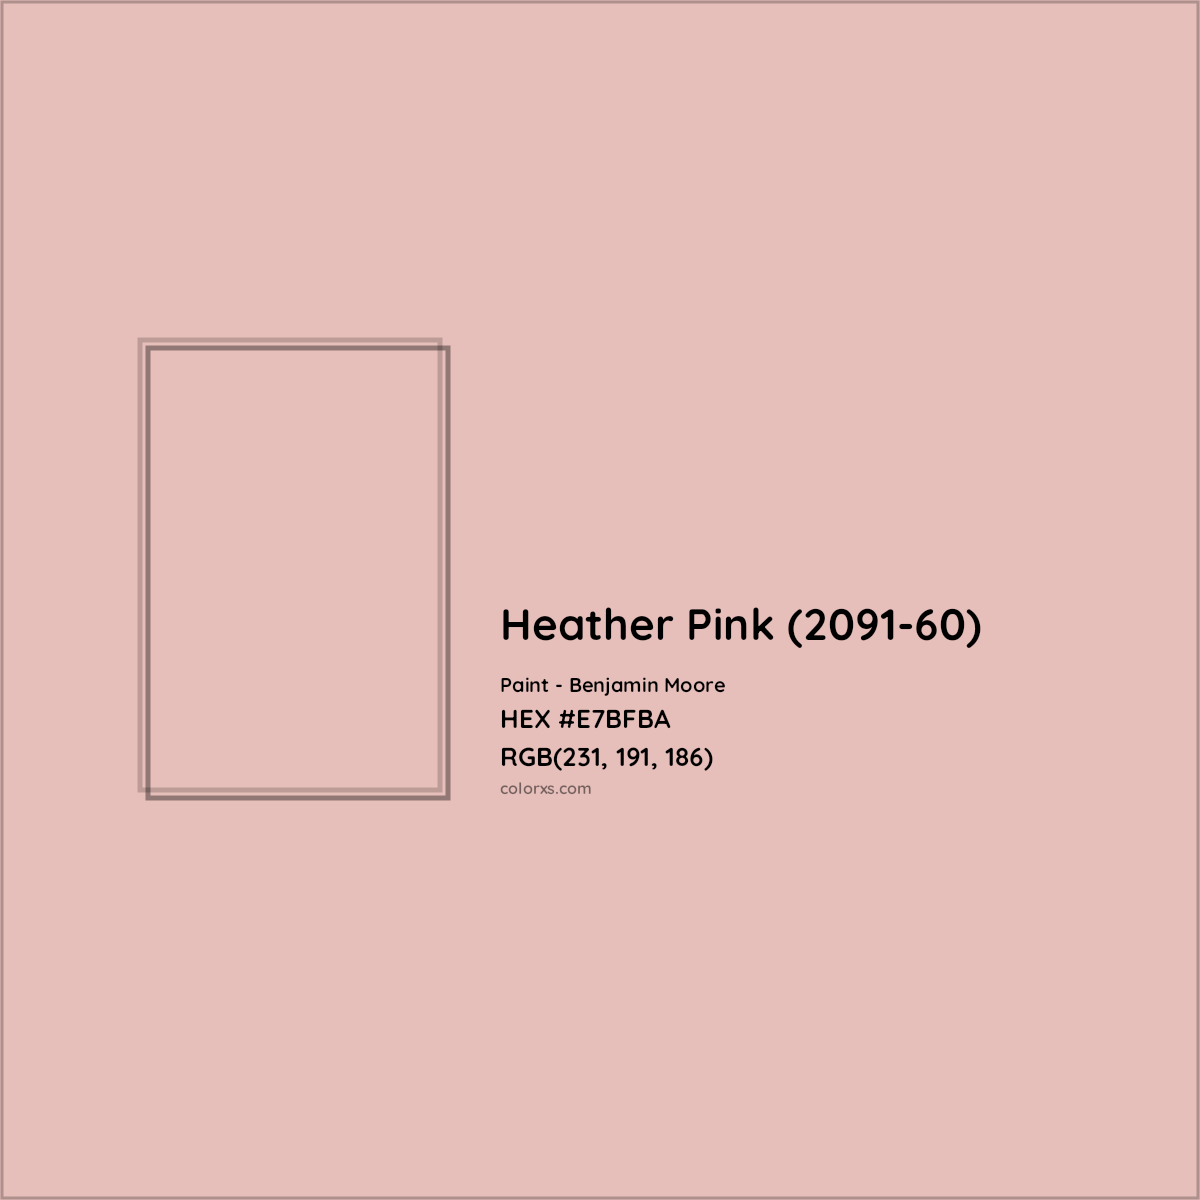 HEX #E7BFBA Heather Pink (2091-60) Paint Benjamin Moore - Color Code